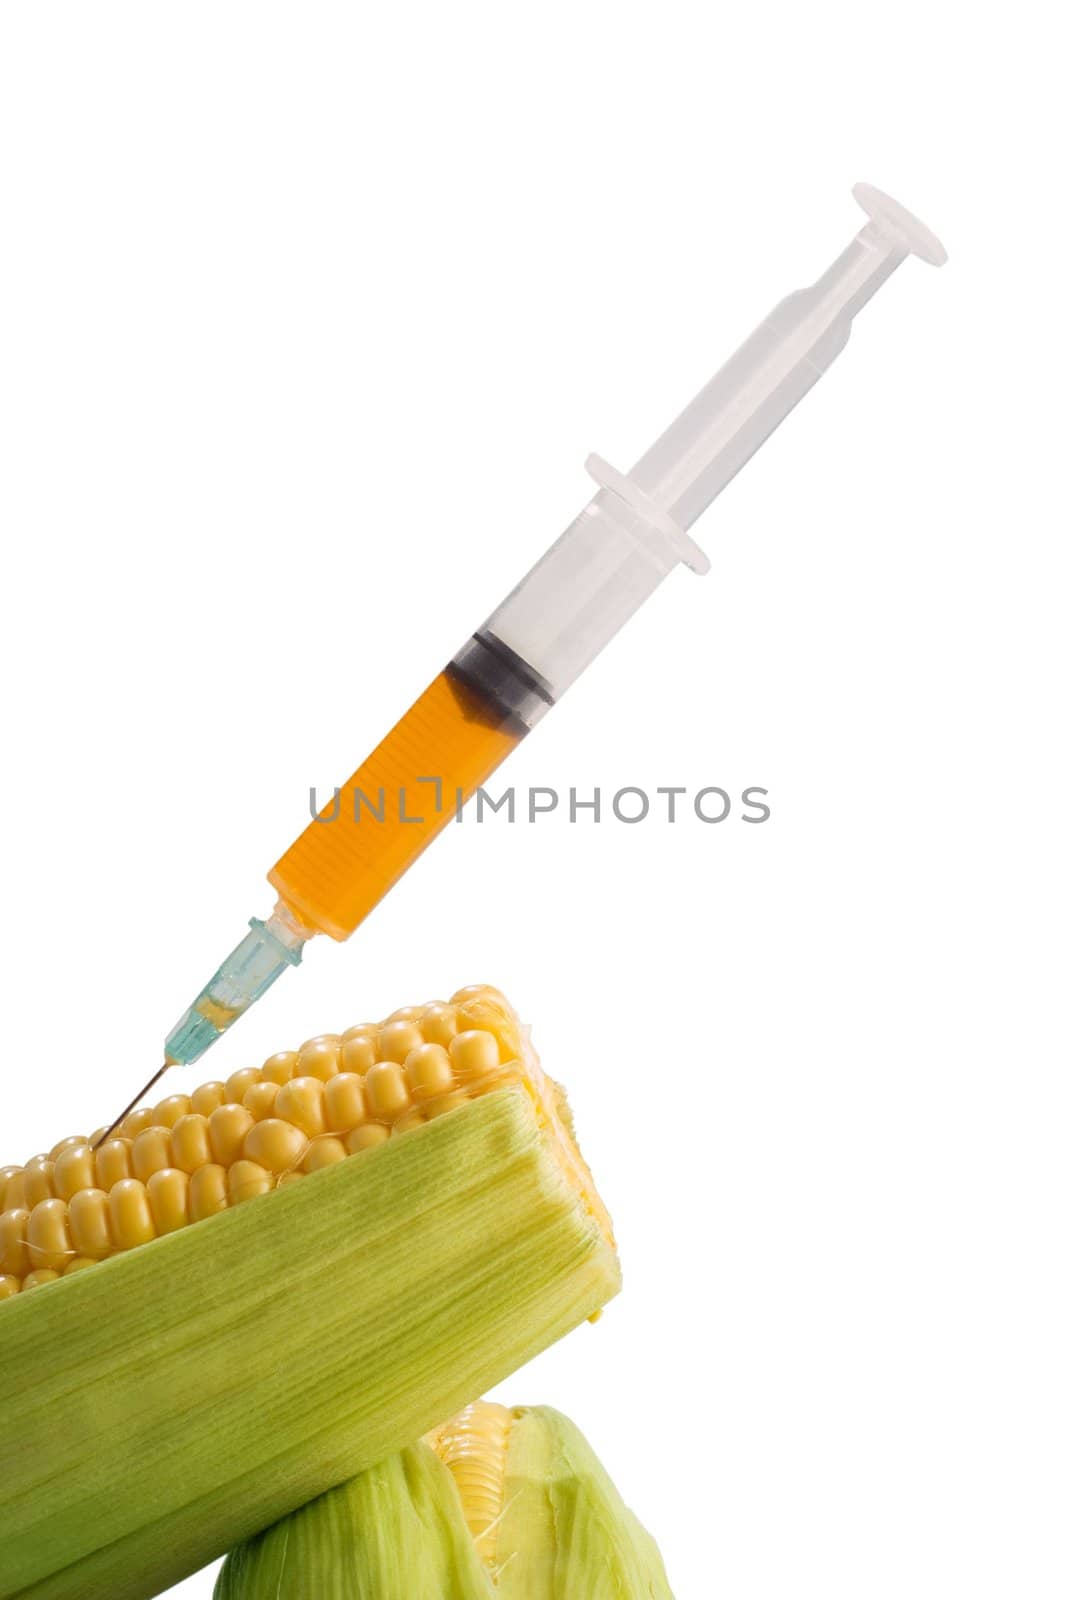 Corn and syringe extracting bio fuel